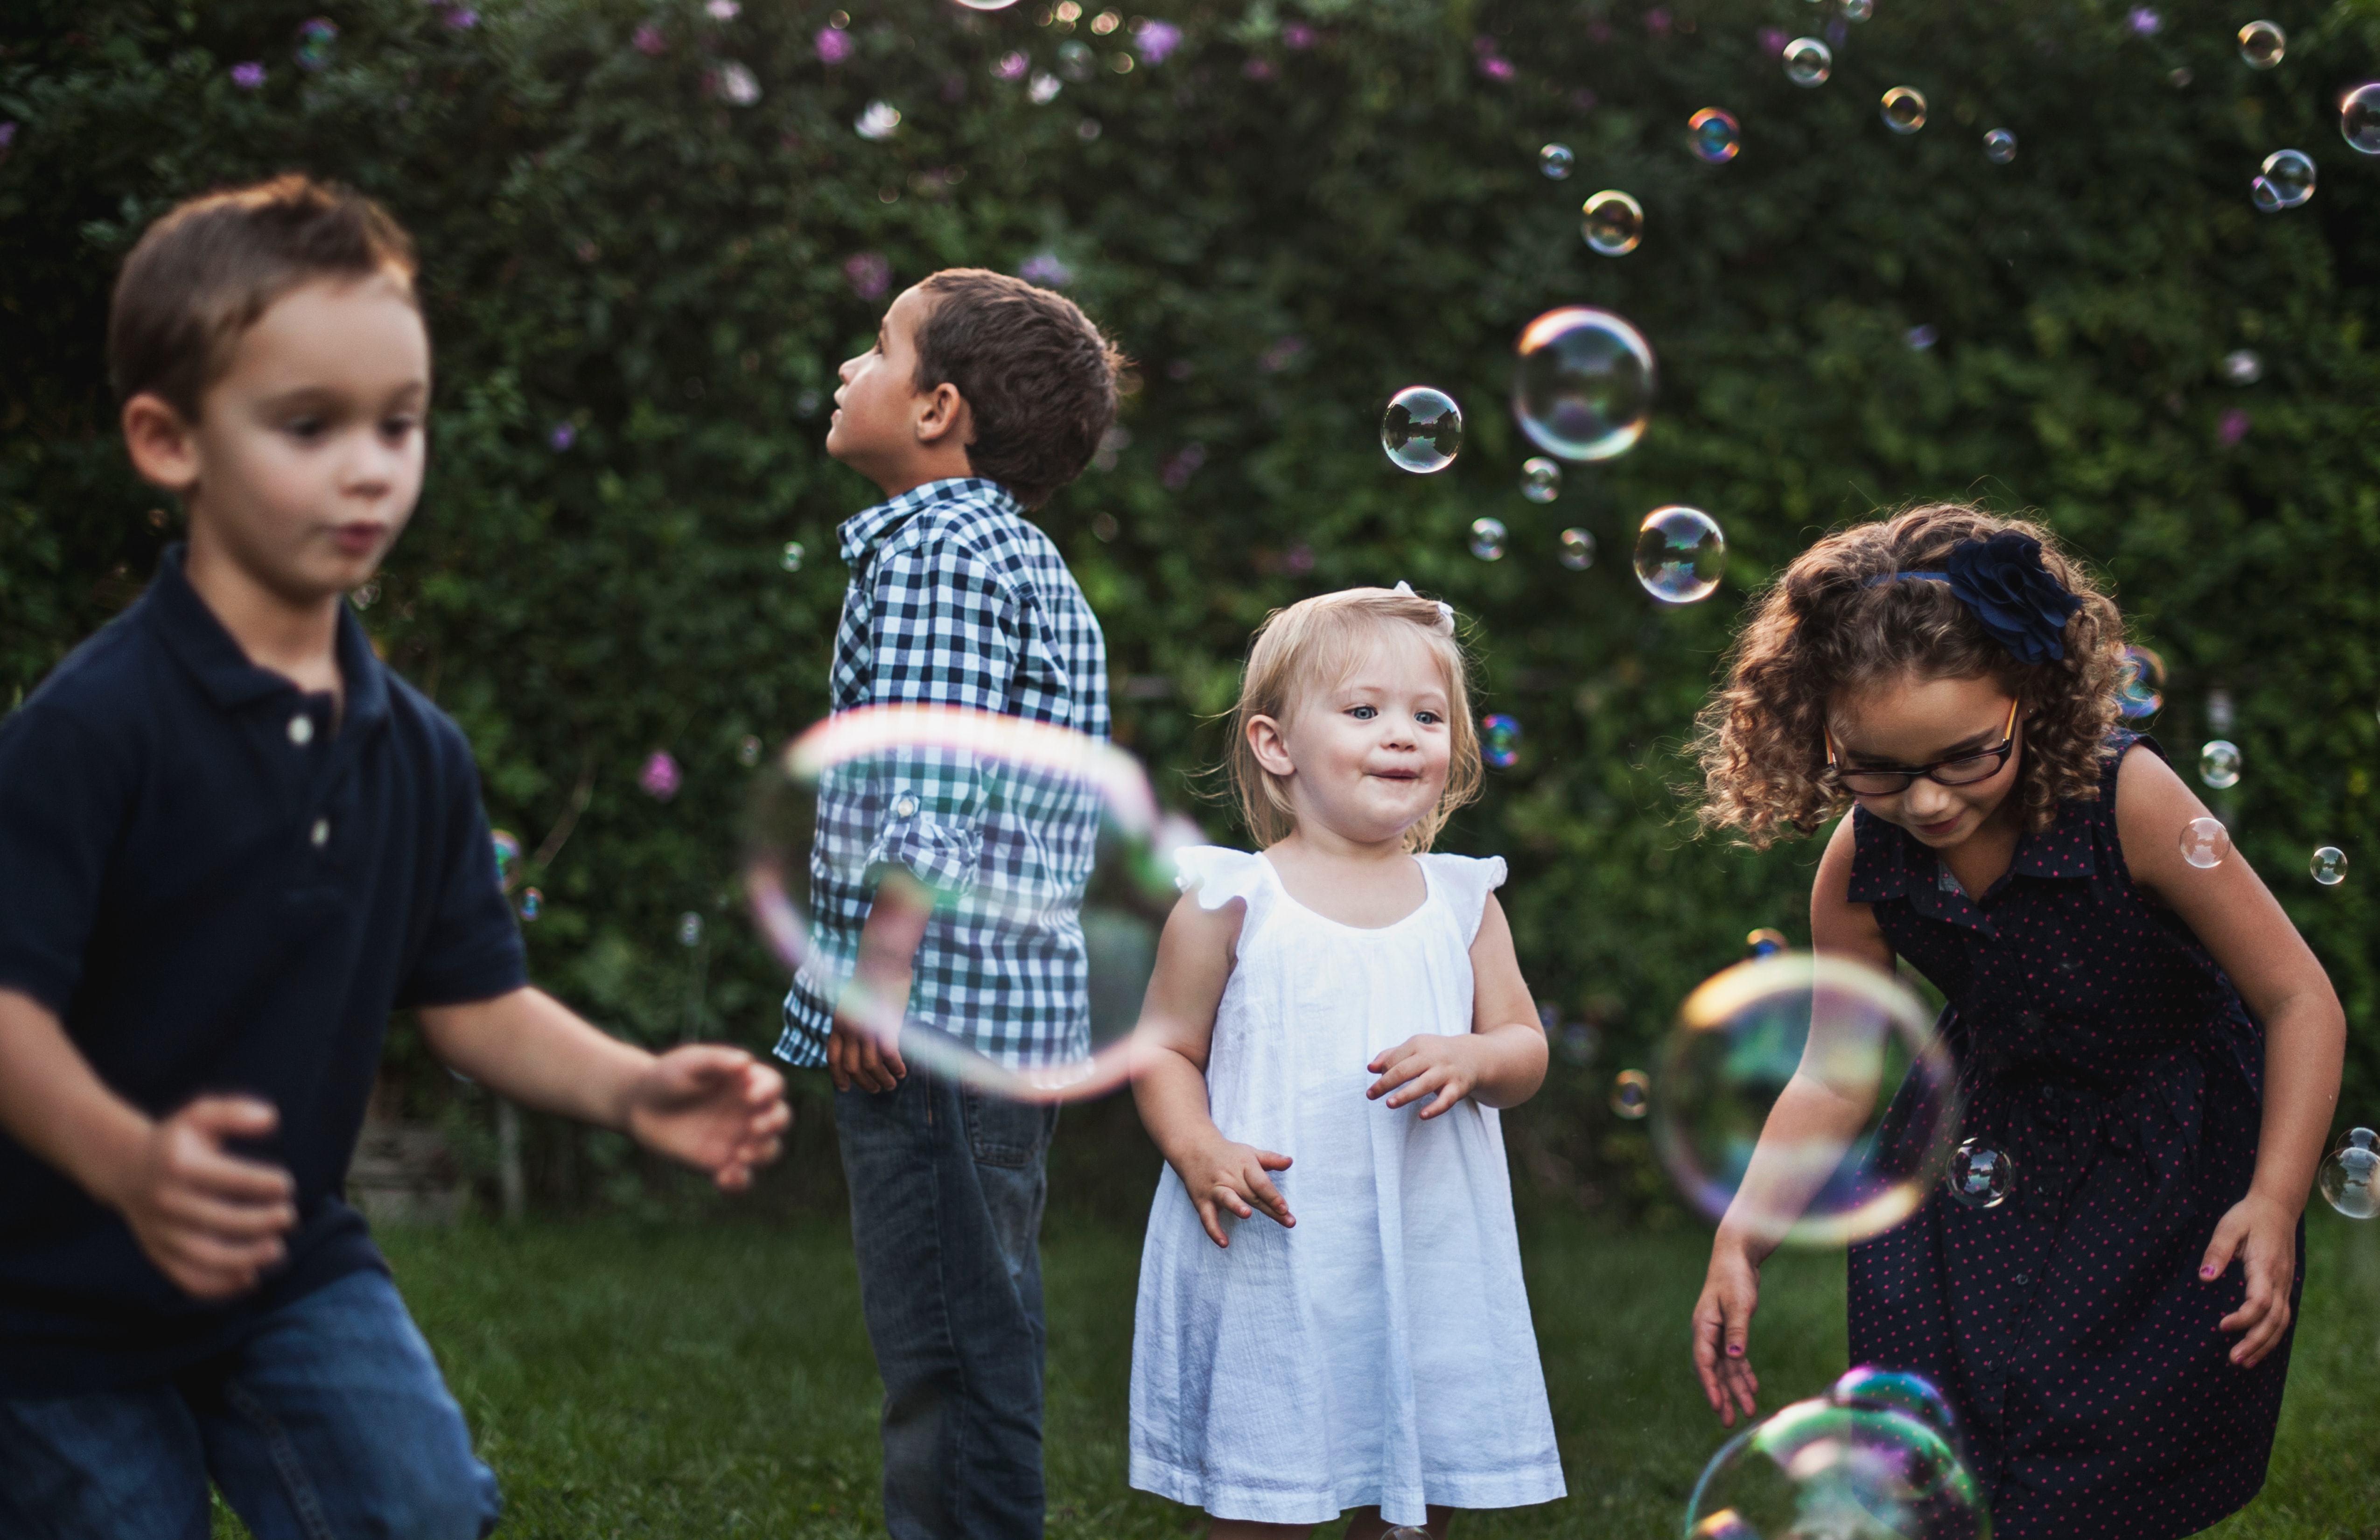 Bubbles and children